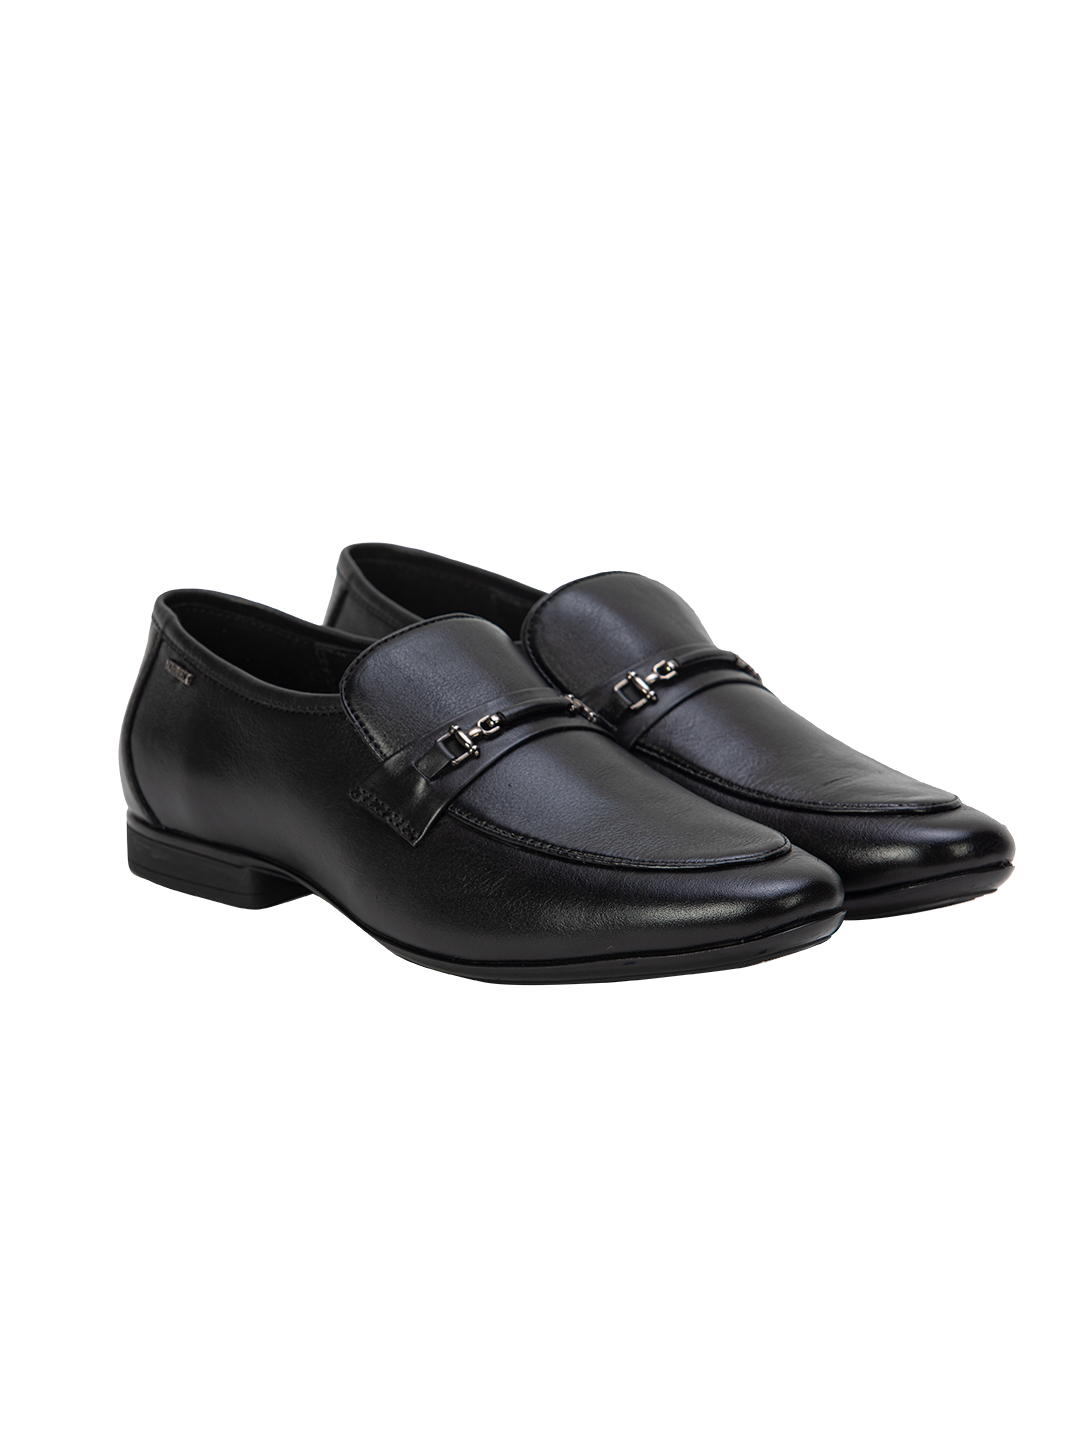 Buy Von Wellx Germany Comfort Black Glib Shoes Online in Chennai